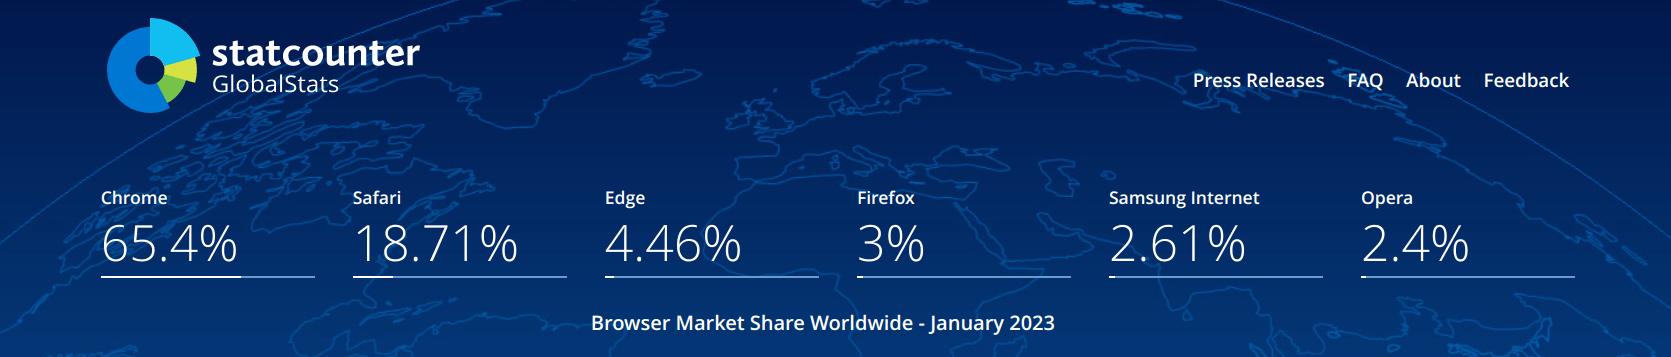 Statcounter browser market share